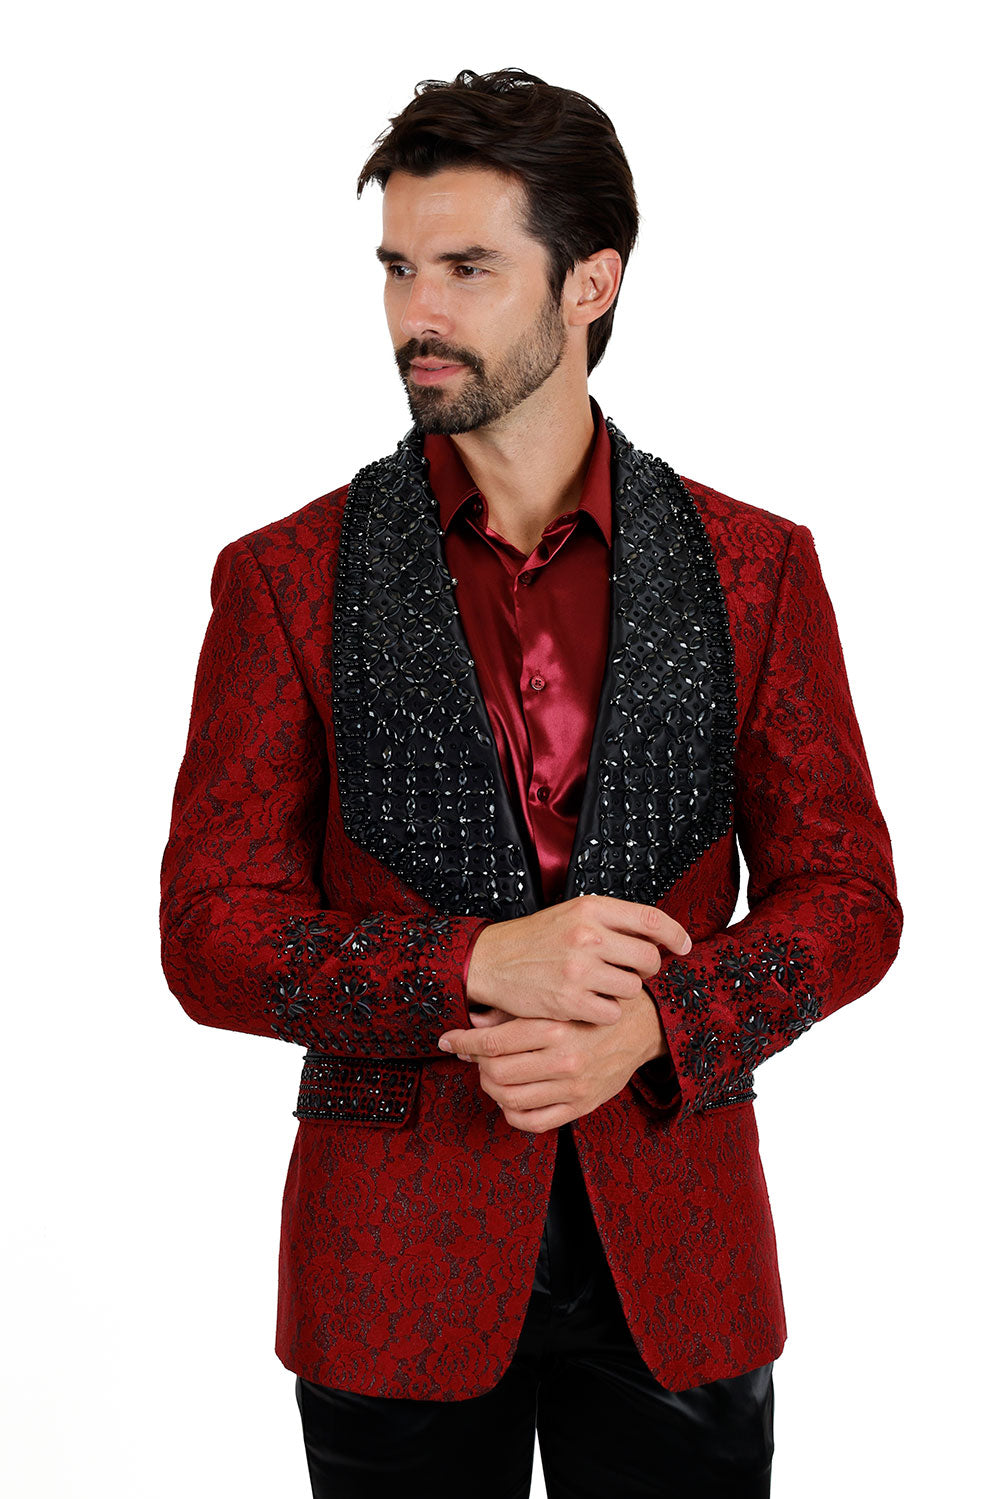 Barabas Elite Men's Rhinestone Floral Luxury Shawl Lapel Blazer 3EBL15 Red Black